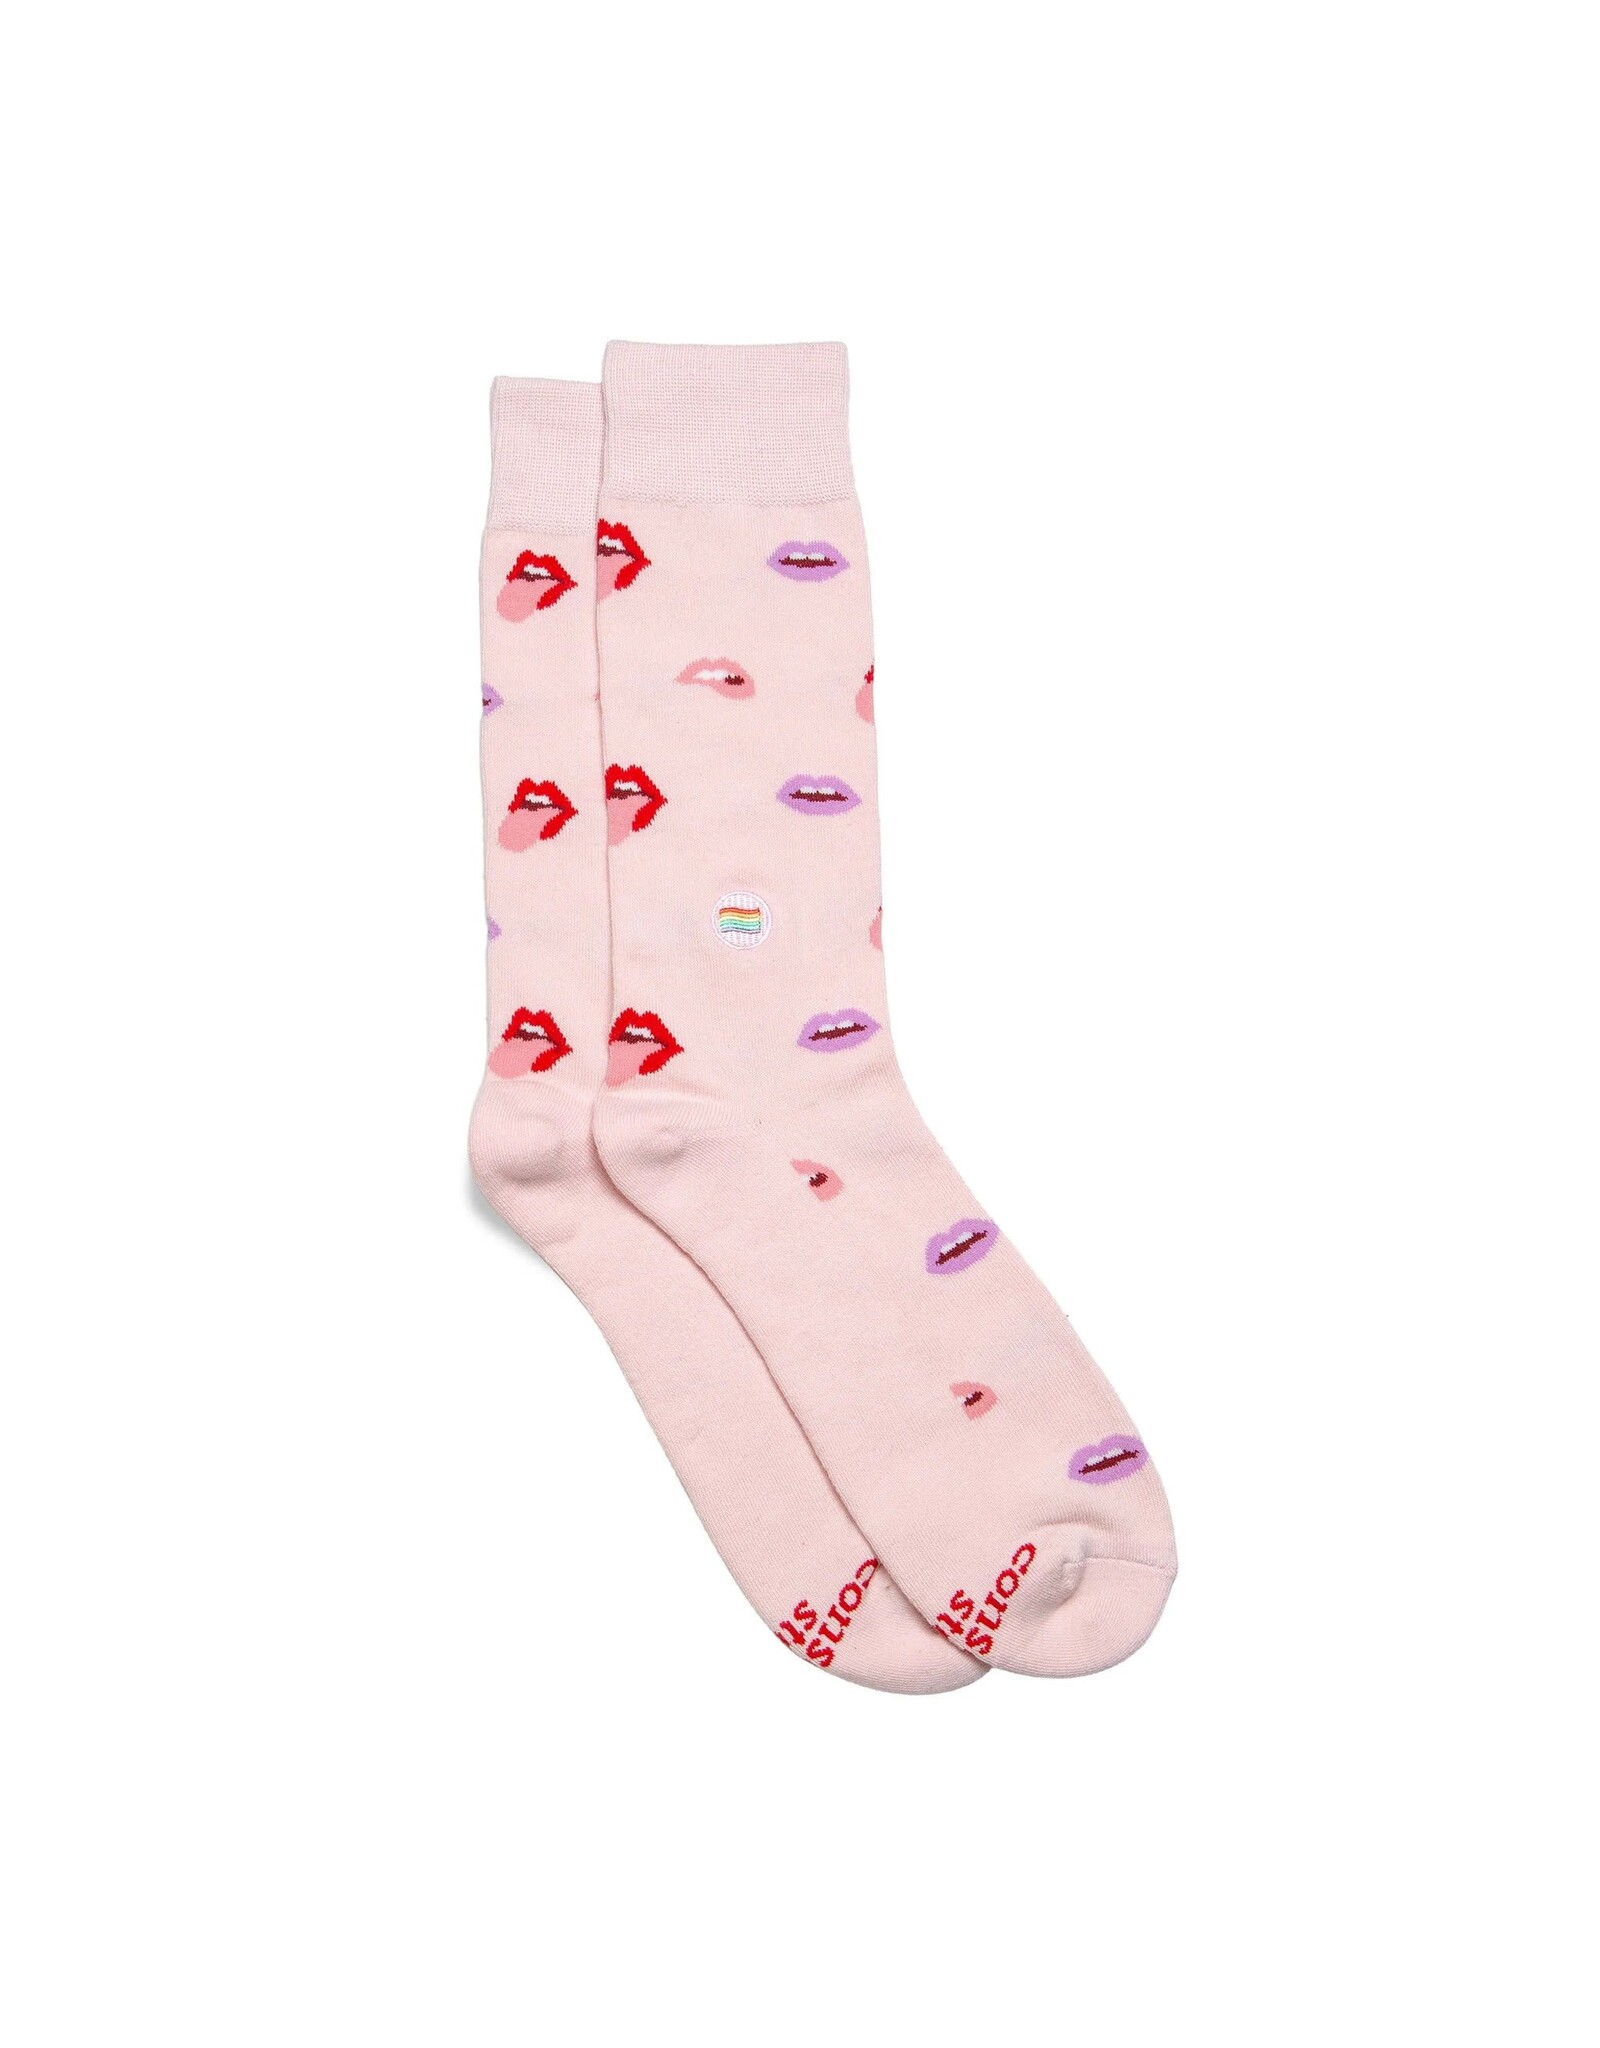 Trade roots Socks that Save LGBTQ Lives- Pink Lips